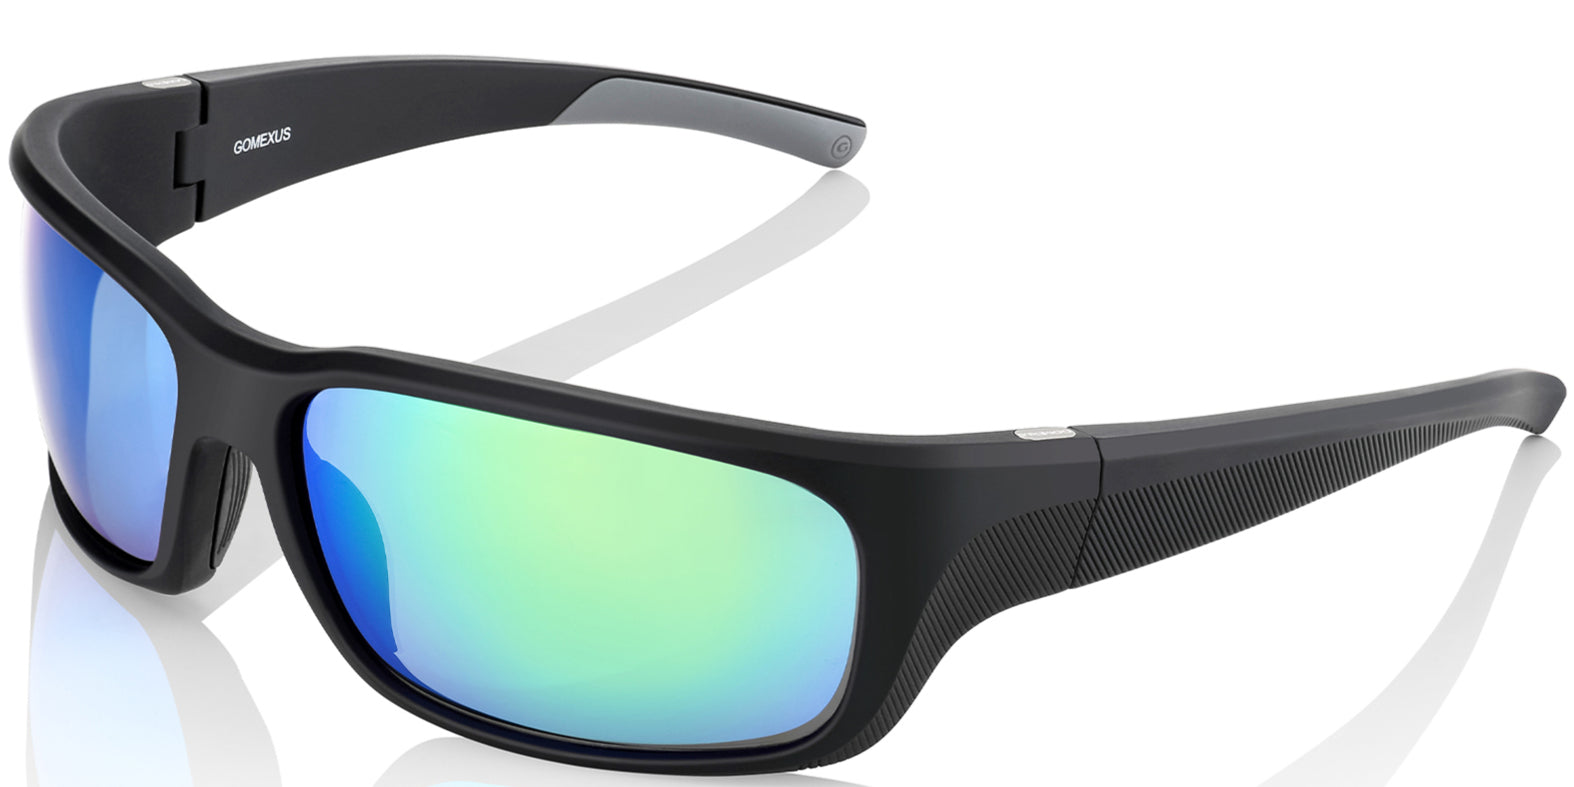 Clarity as Glass: Gomexus Fishing Sunglasses